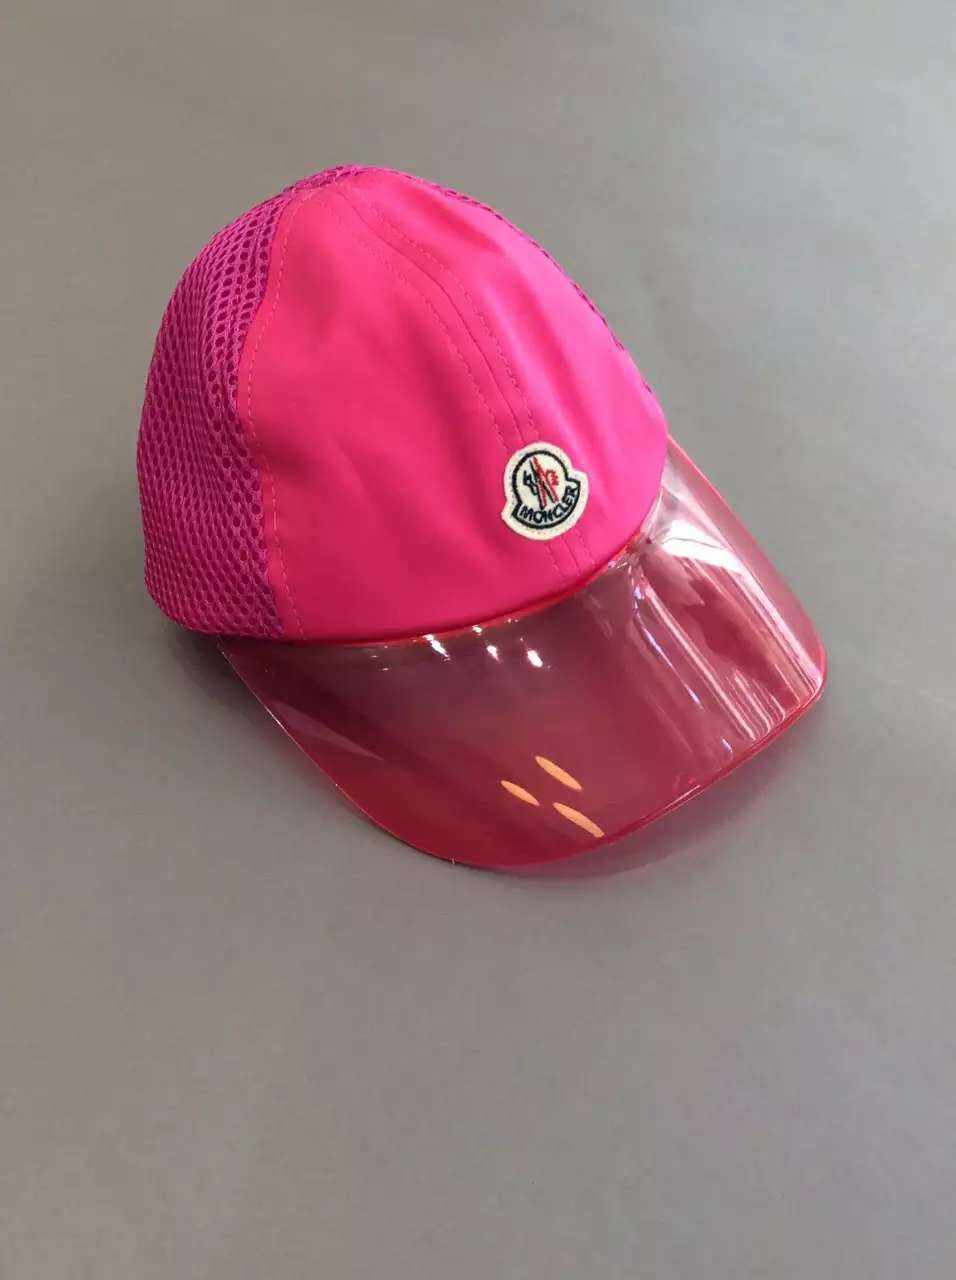 Boys&Girls Red Hollow Cap With Plastic Brim - CÉMAROSE | Children's Fashion Store